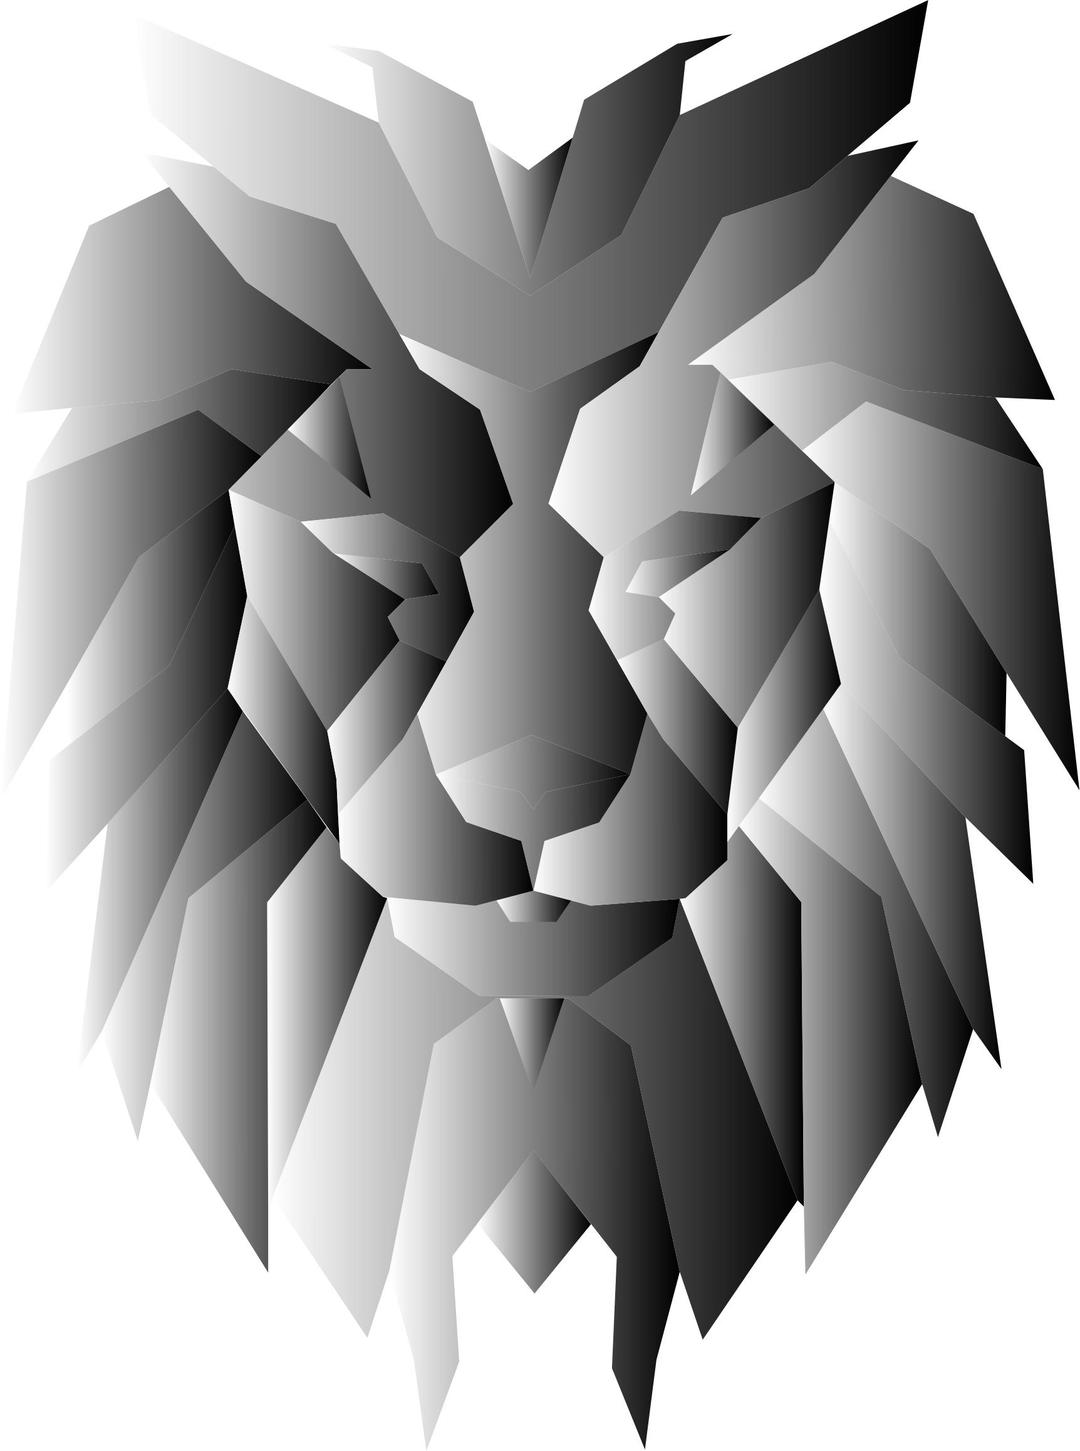 Grayscale Polygonal Lion Face png transparent